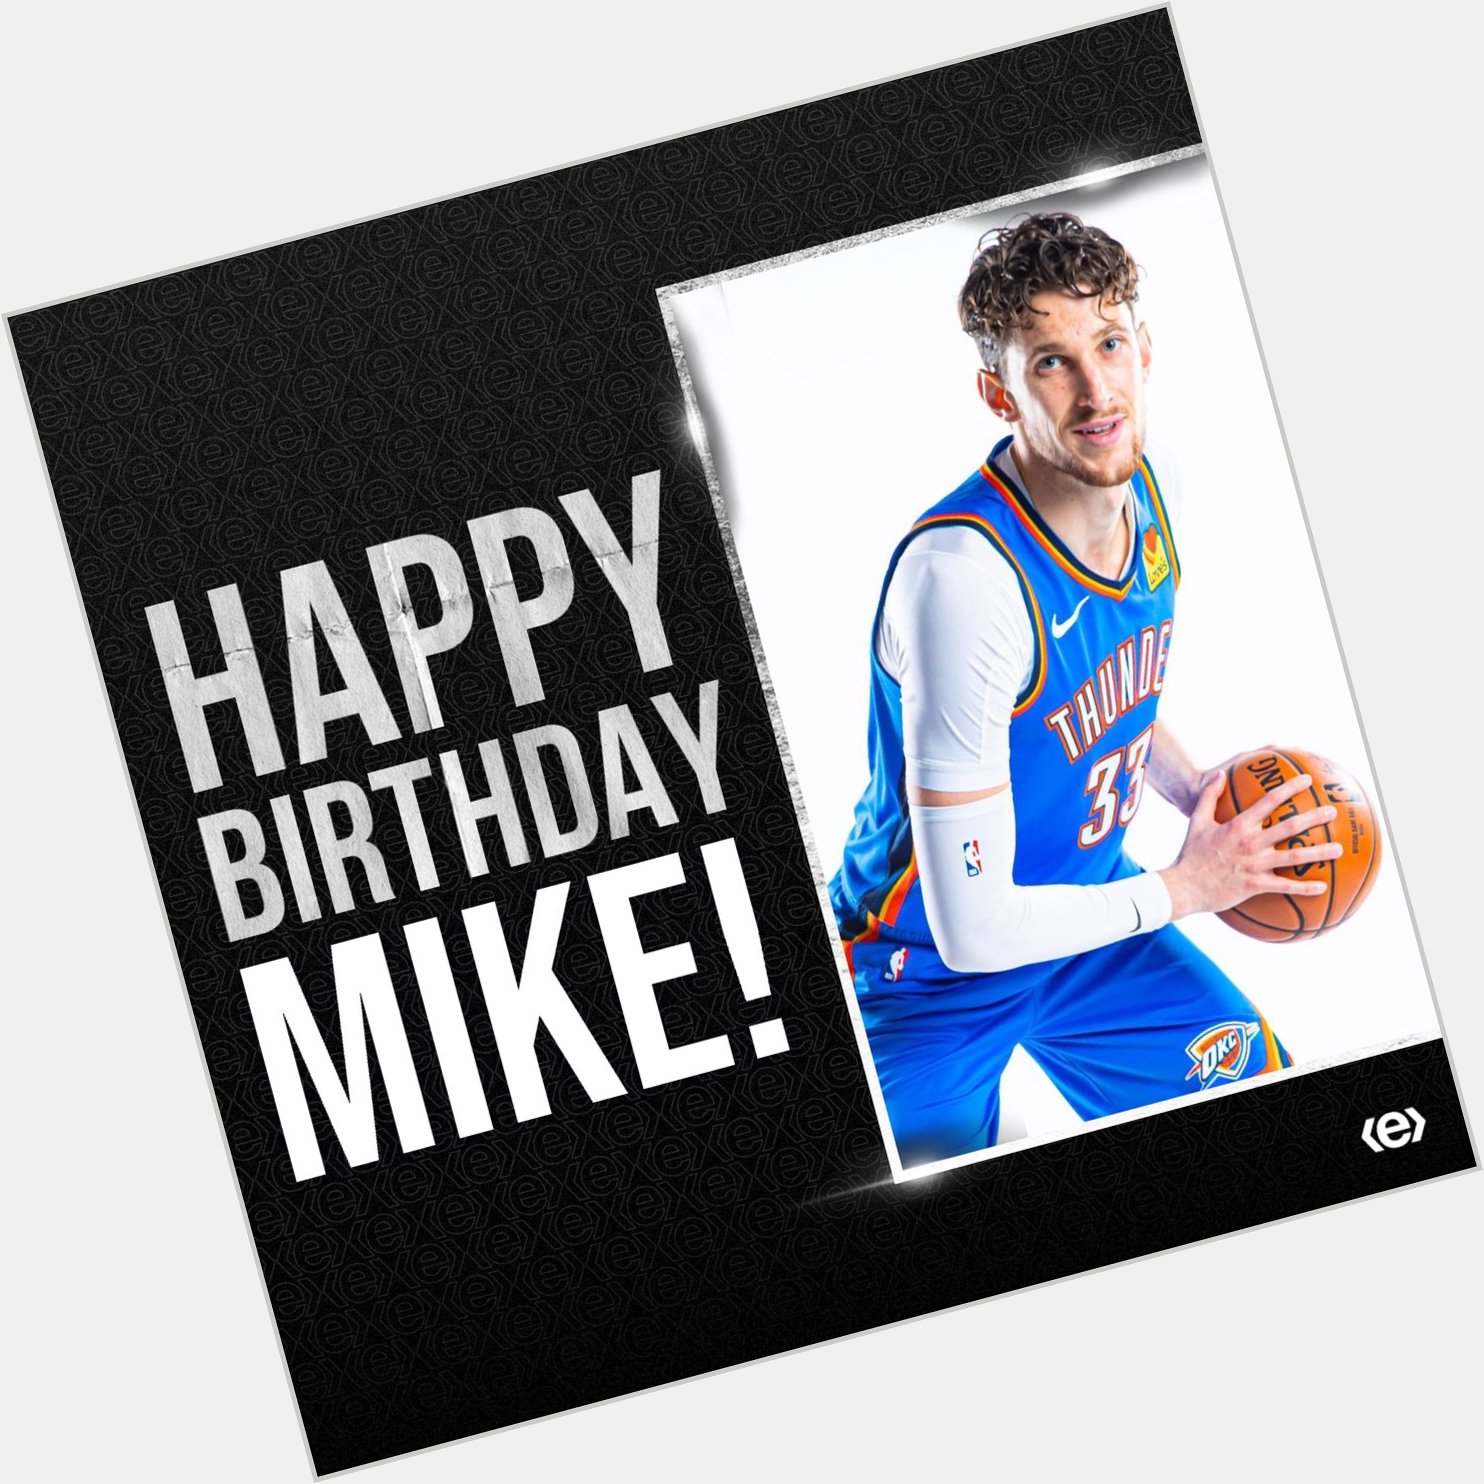 Happy birthday, Mike Muscala! 